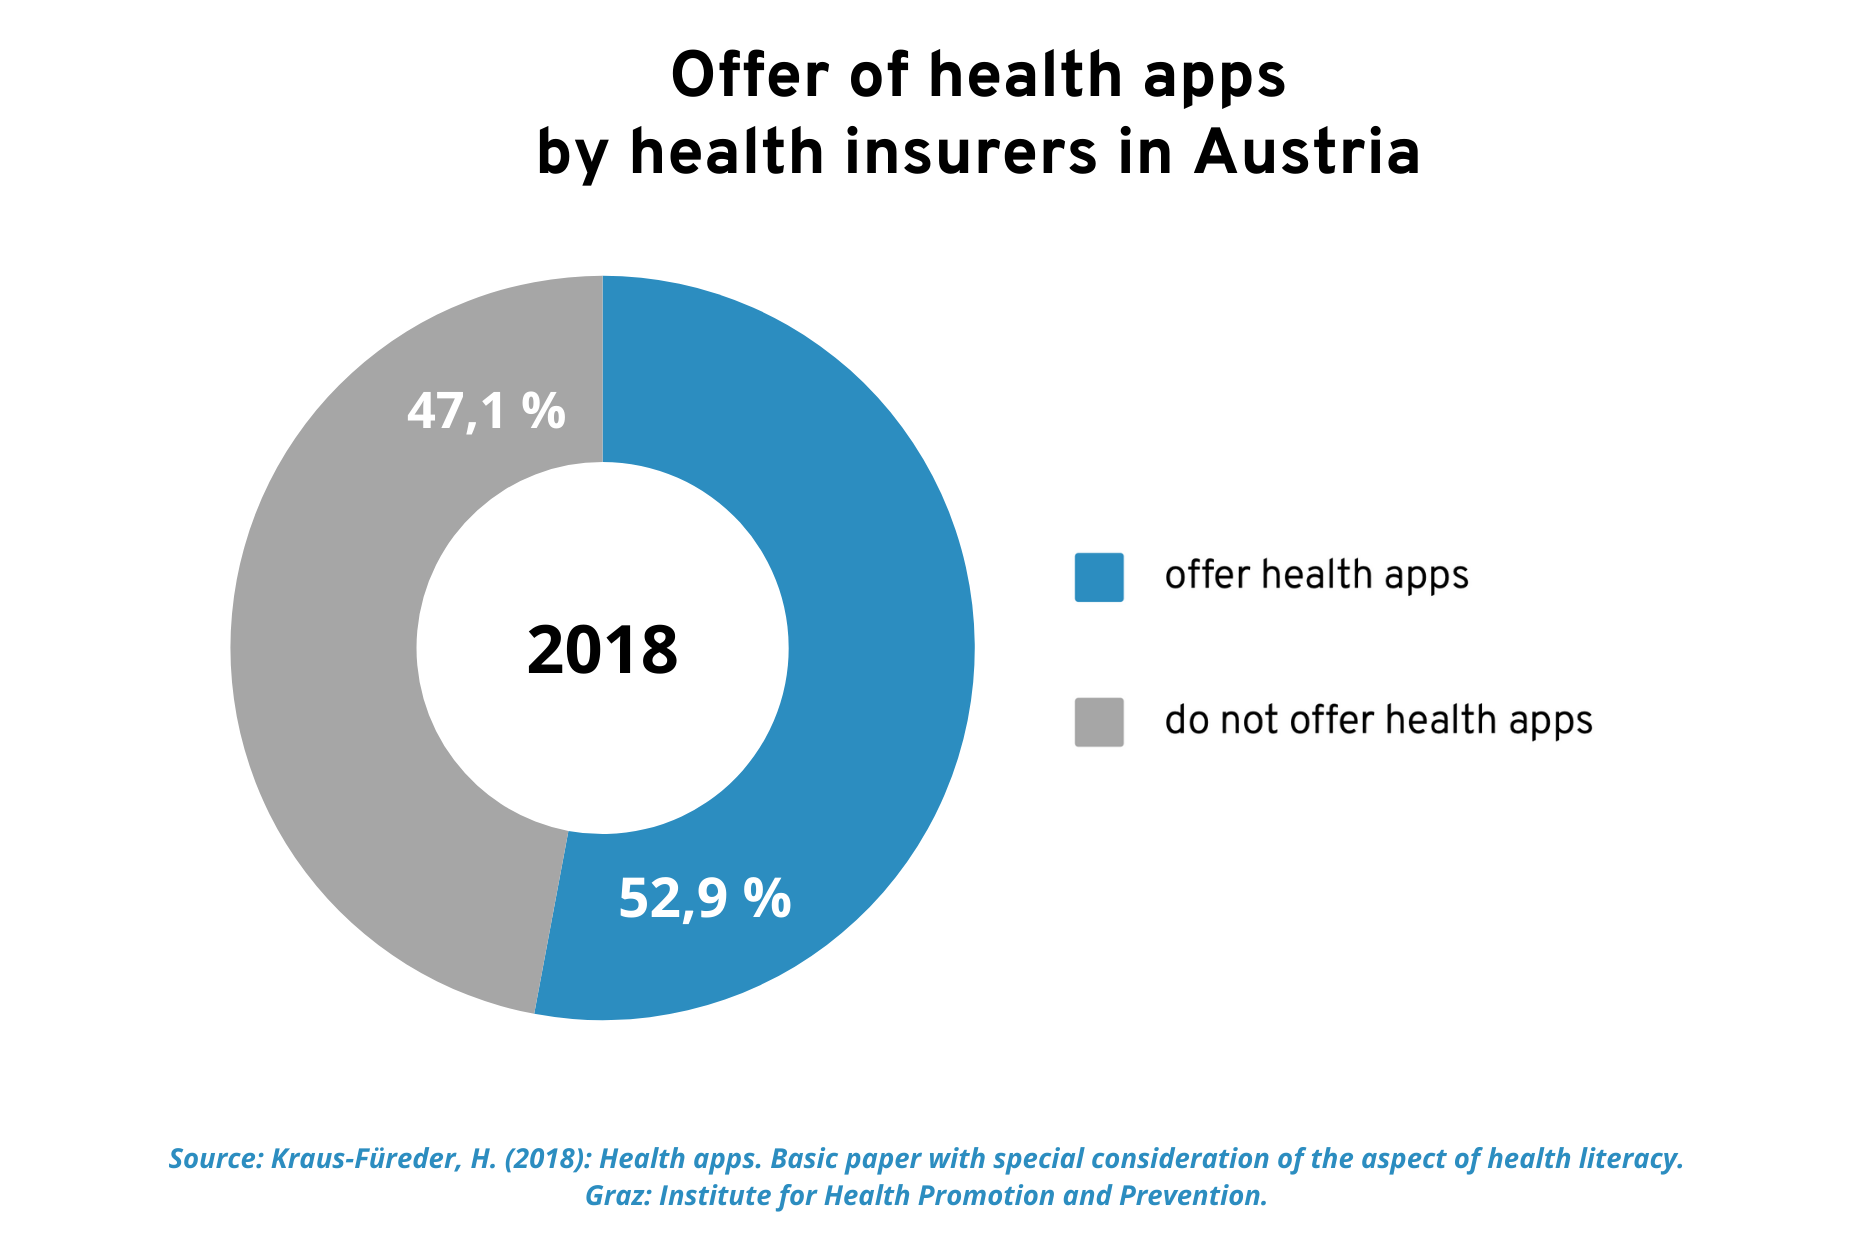 So far, just over half of health insurance companies in Austria offer digital health applications.